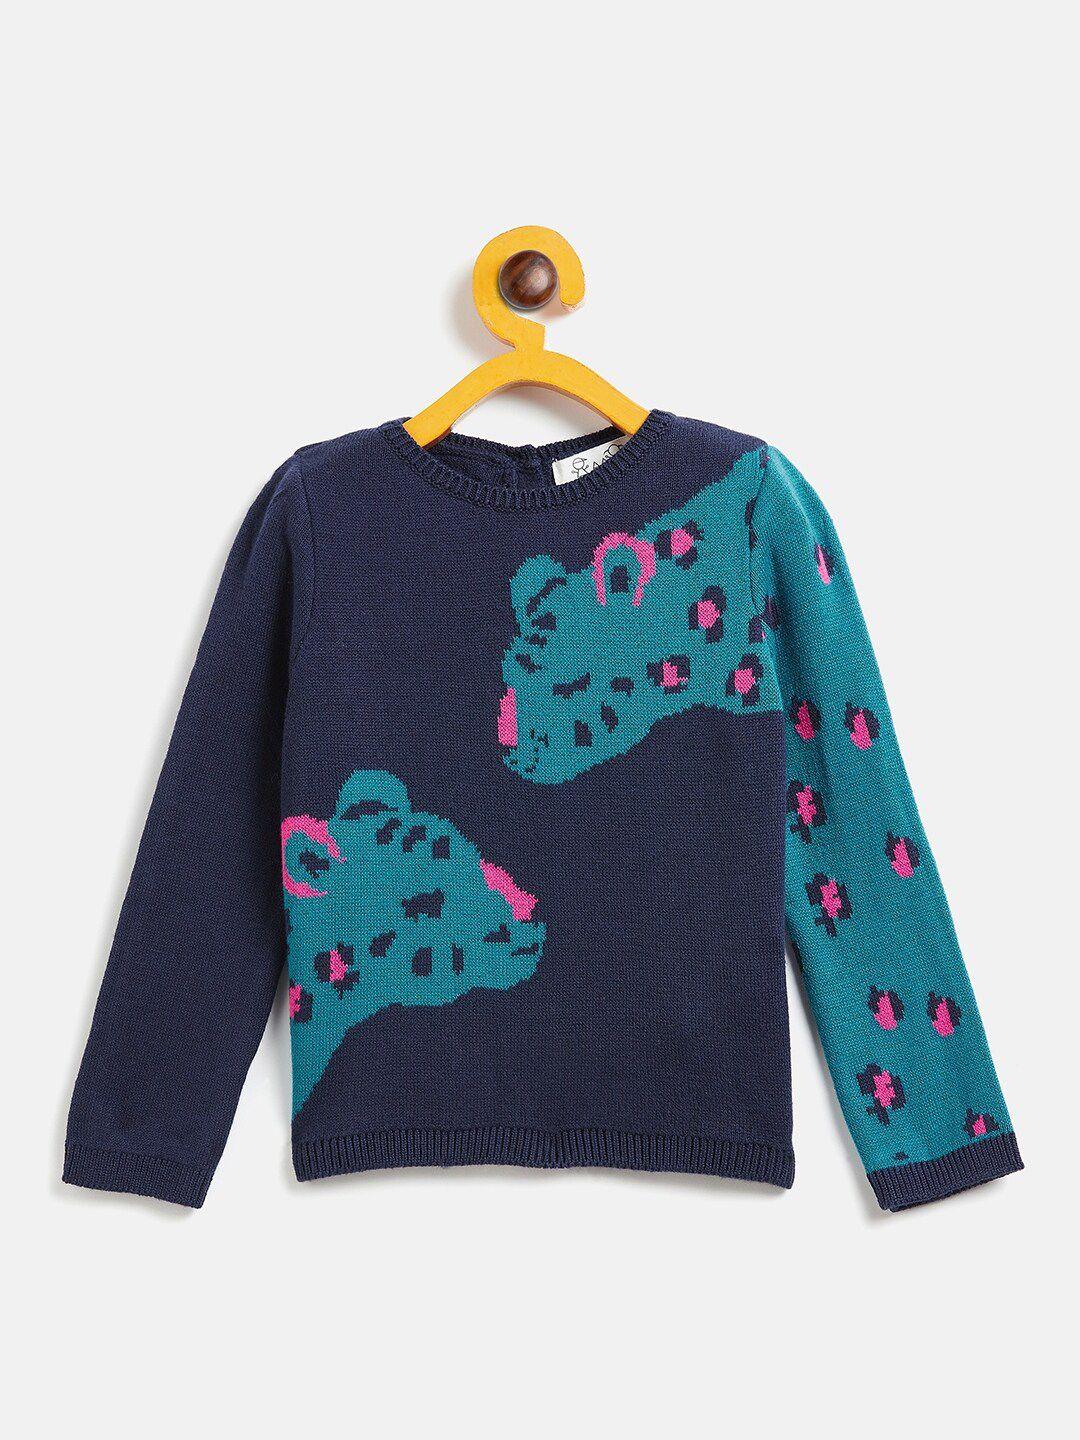 jwaaq unisex kids navy blue & pink animal printed pullover